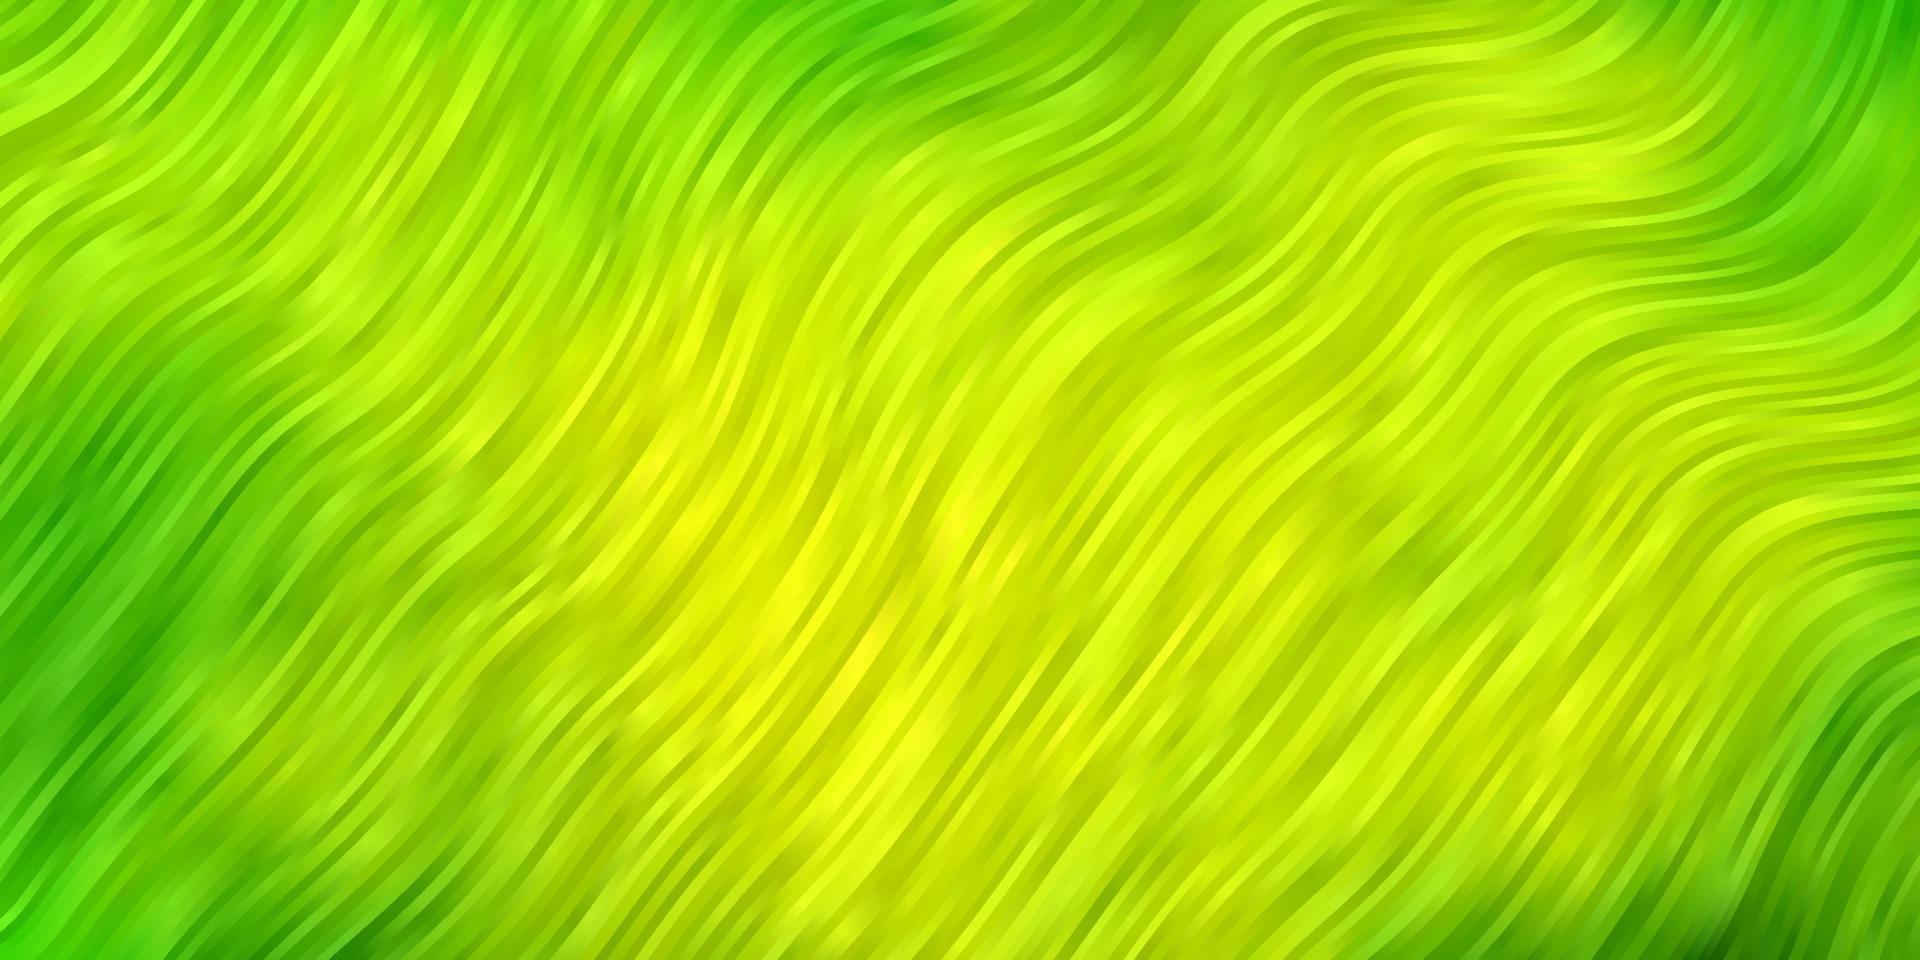 Fondo de vector verde claro, amarillo con líneas torcidas.